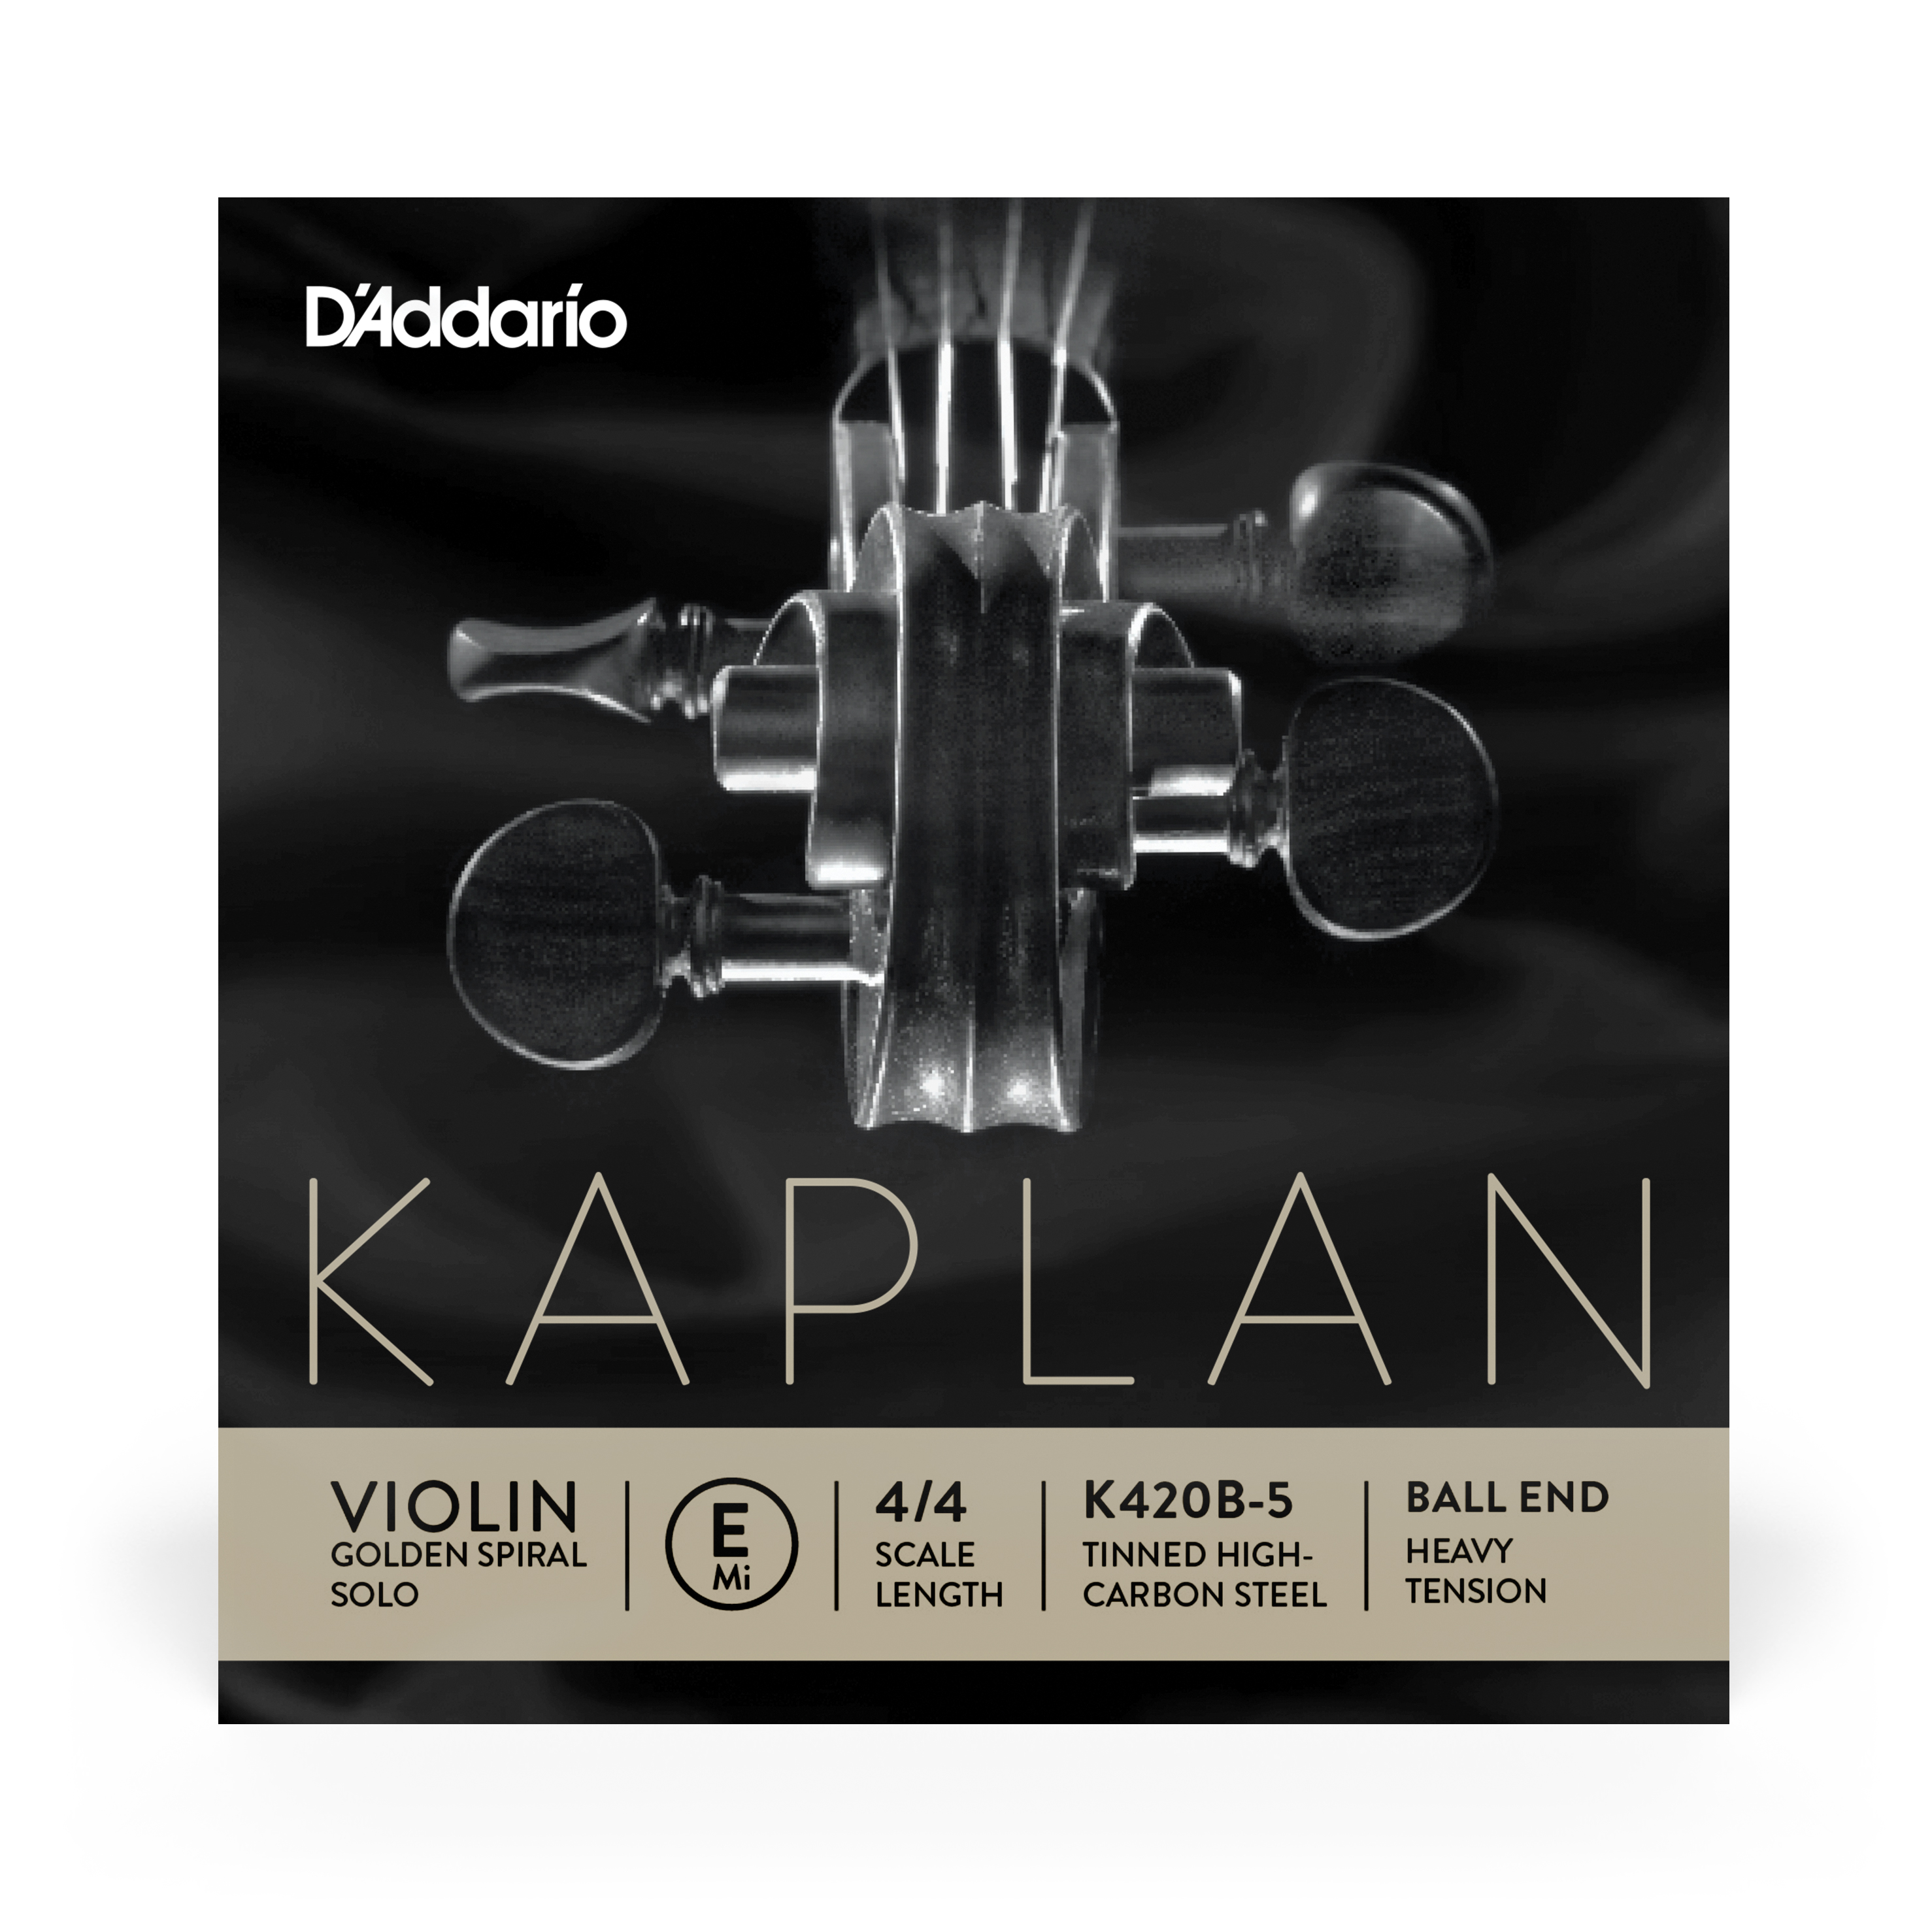 Daddario orchestral it K420b-5 corda singola mi d'addario kaplan golden spiral solo per violino, scala 4/4, tensione forte